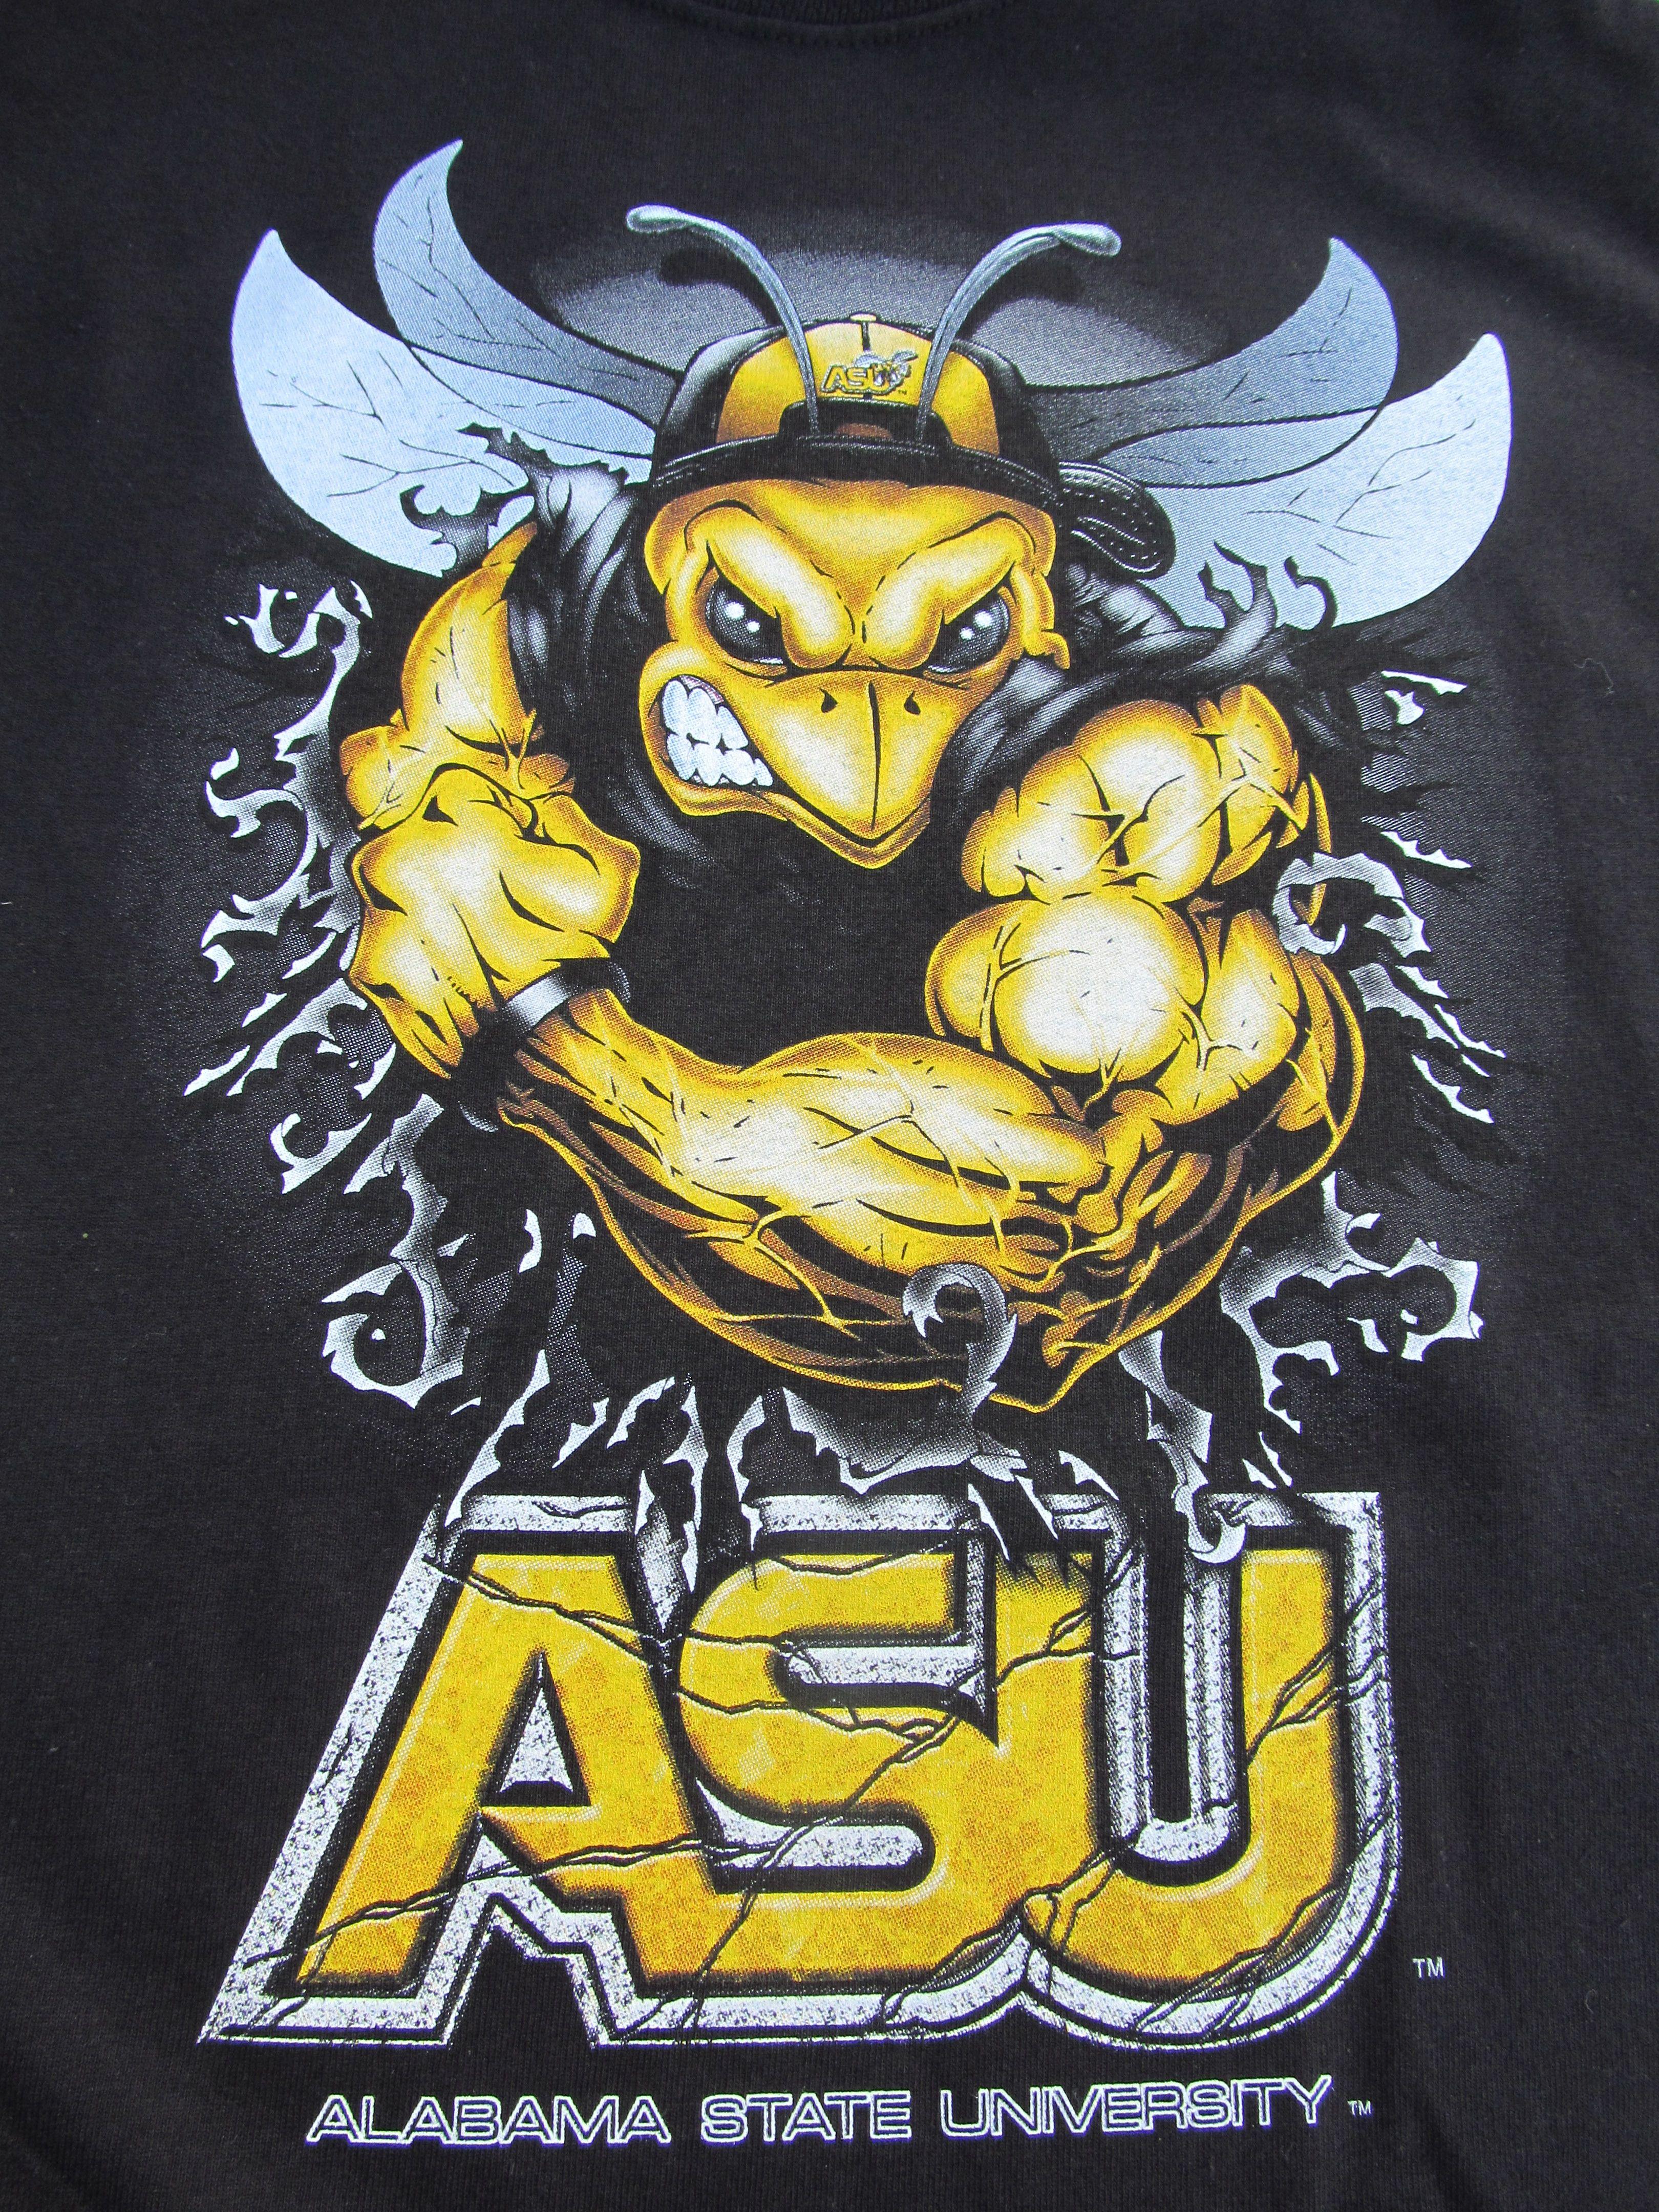 Alabama State University Logo - New ASU Stadium